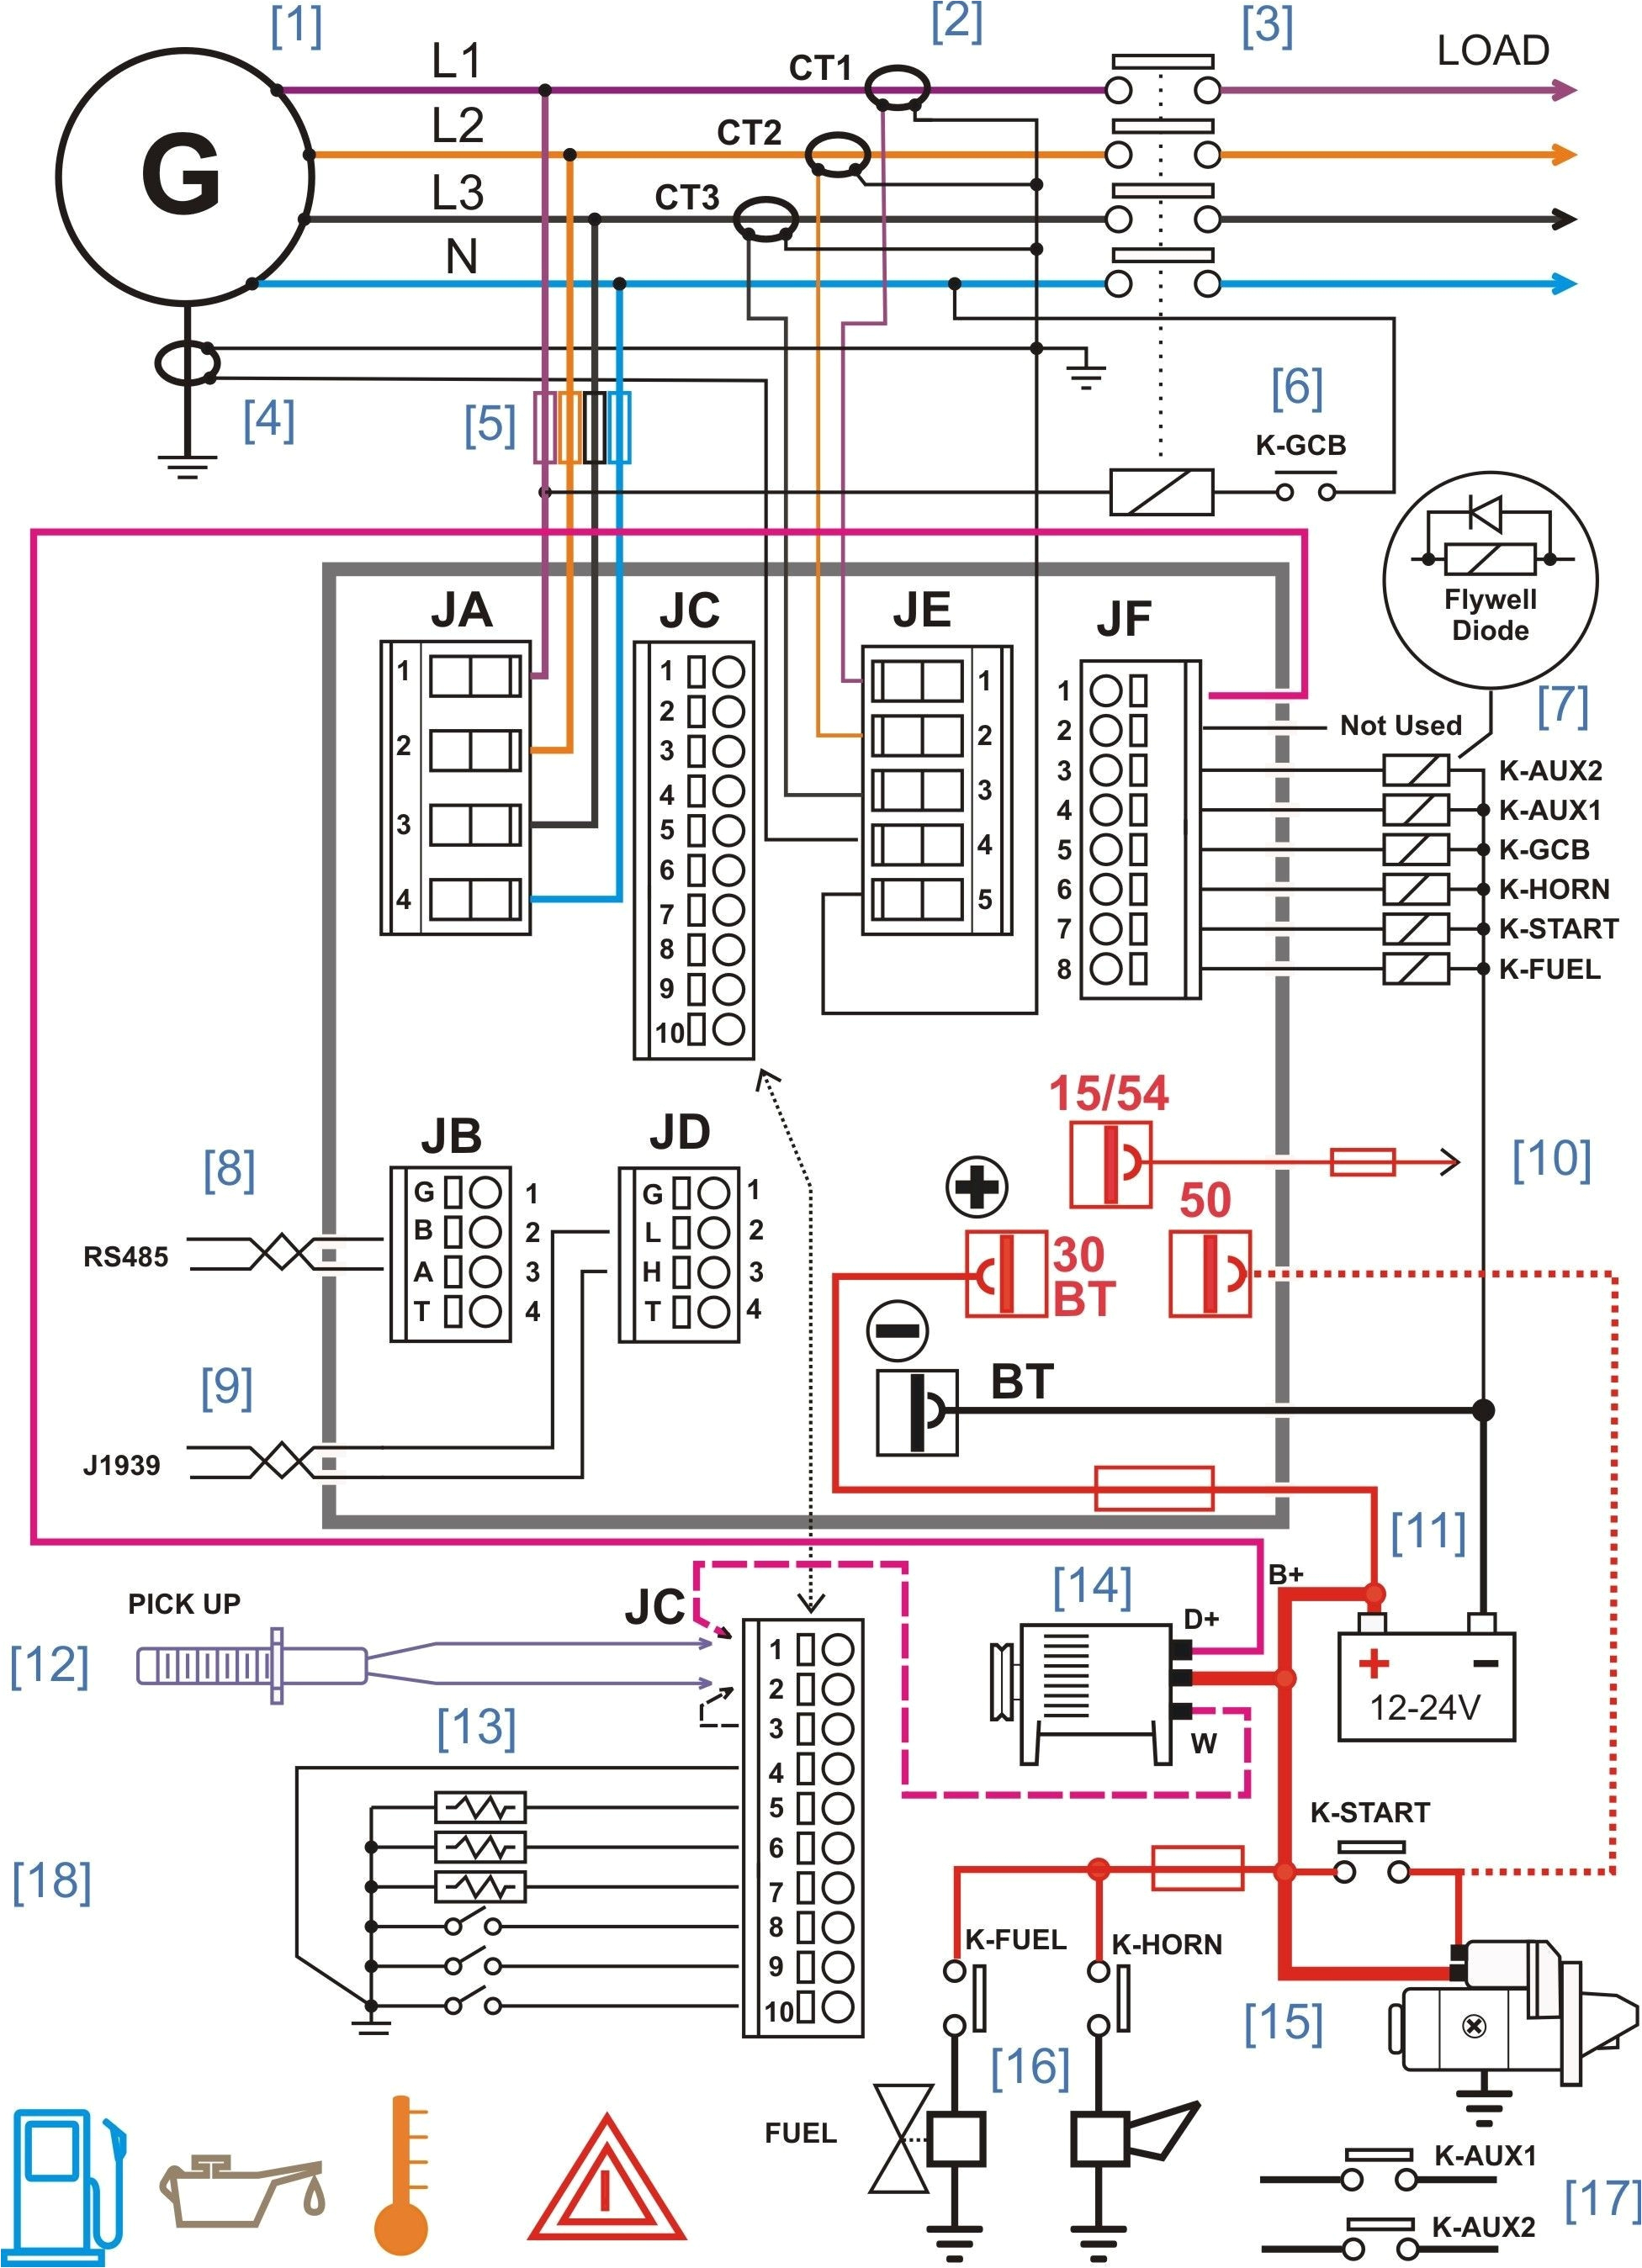 olympian generator control panel wiring diagram wiring diagram host olympian generator wiring diagram olympian generator wiring diagram